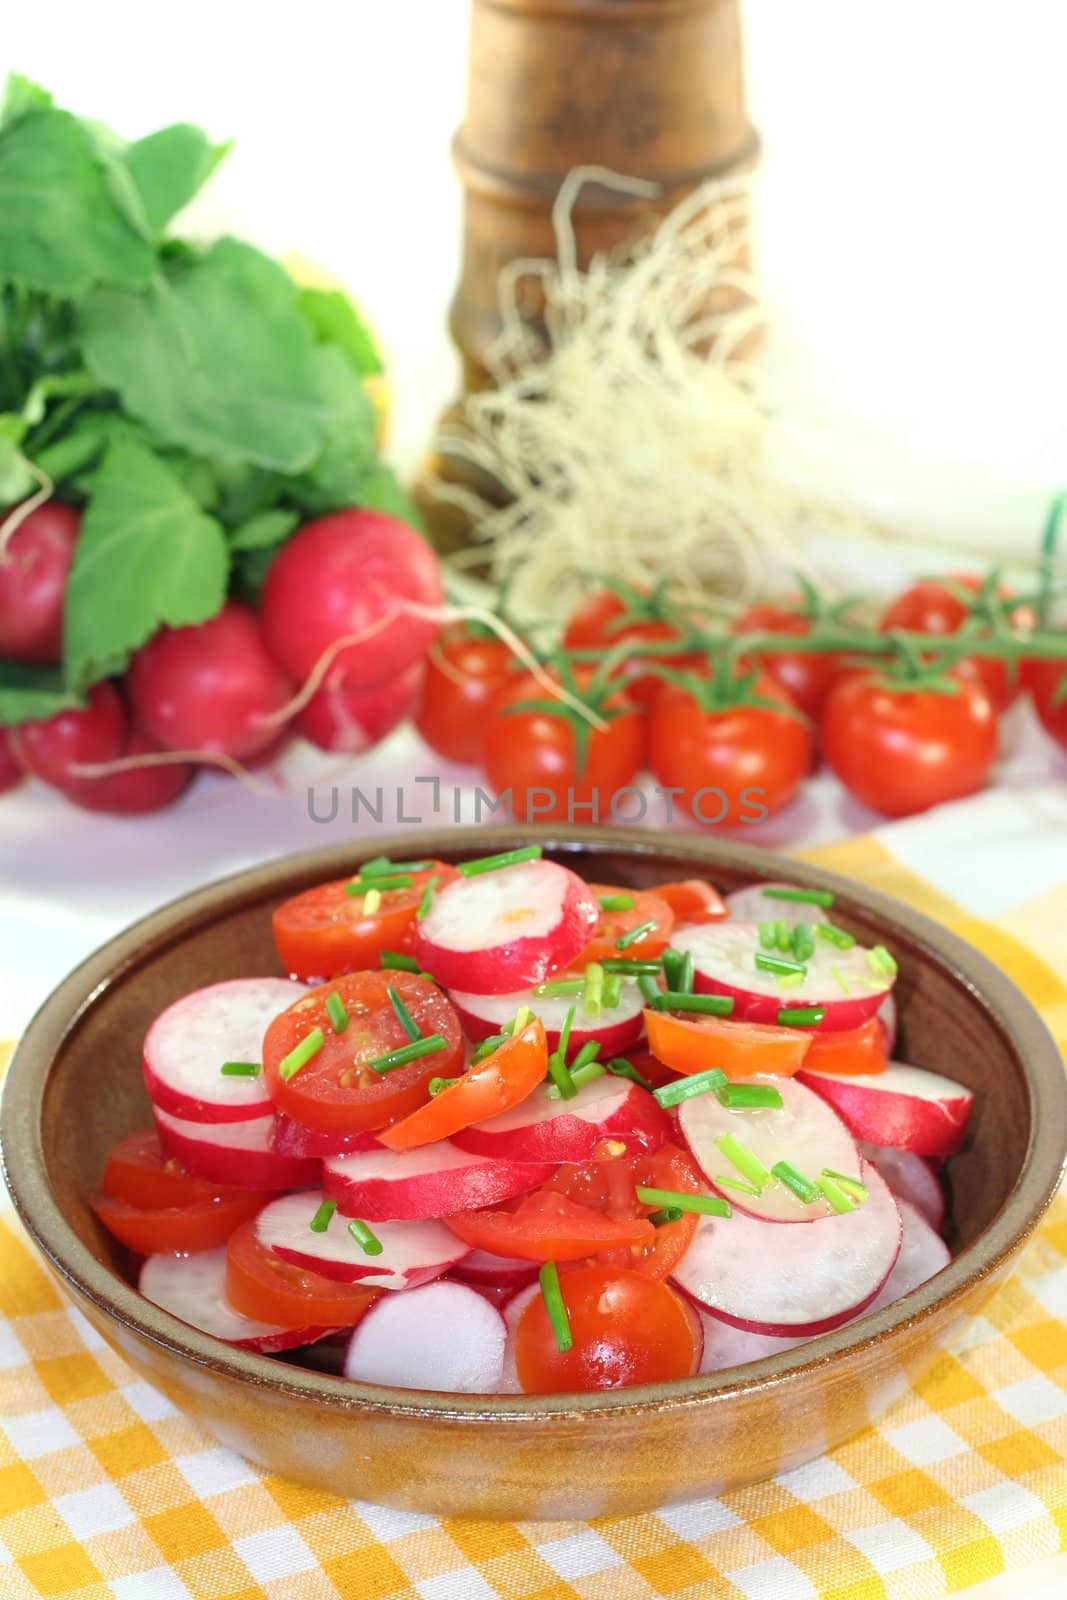 fresh radish and tomato salad with chives